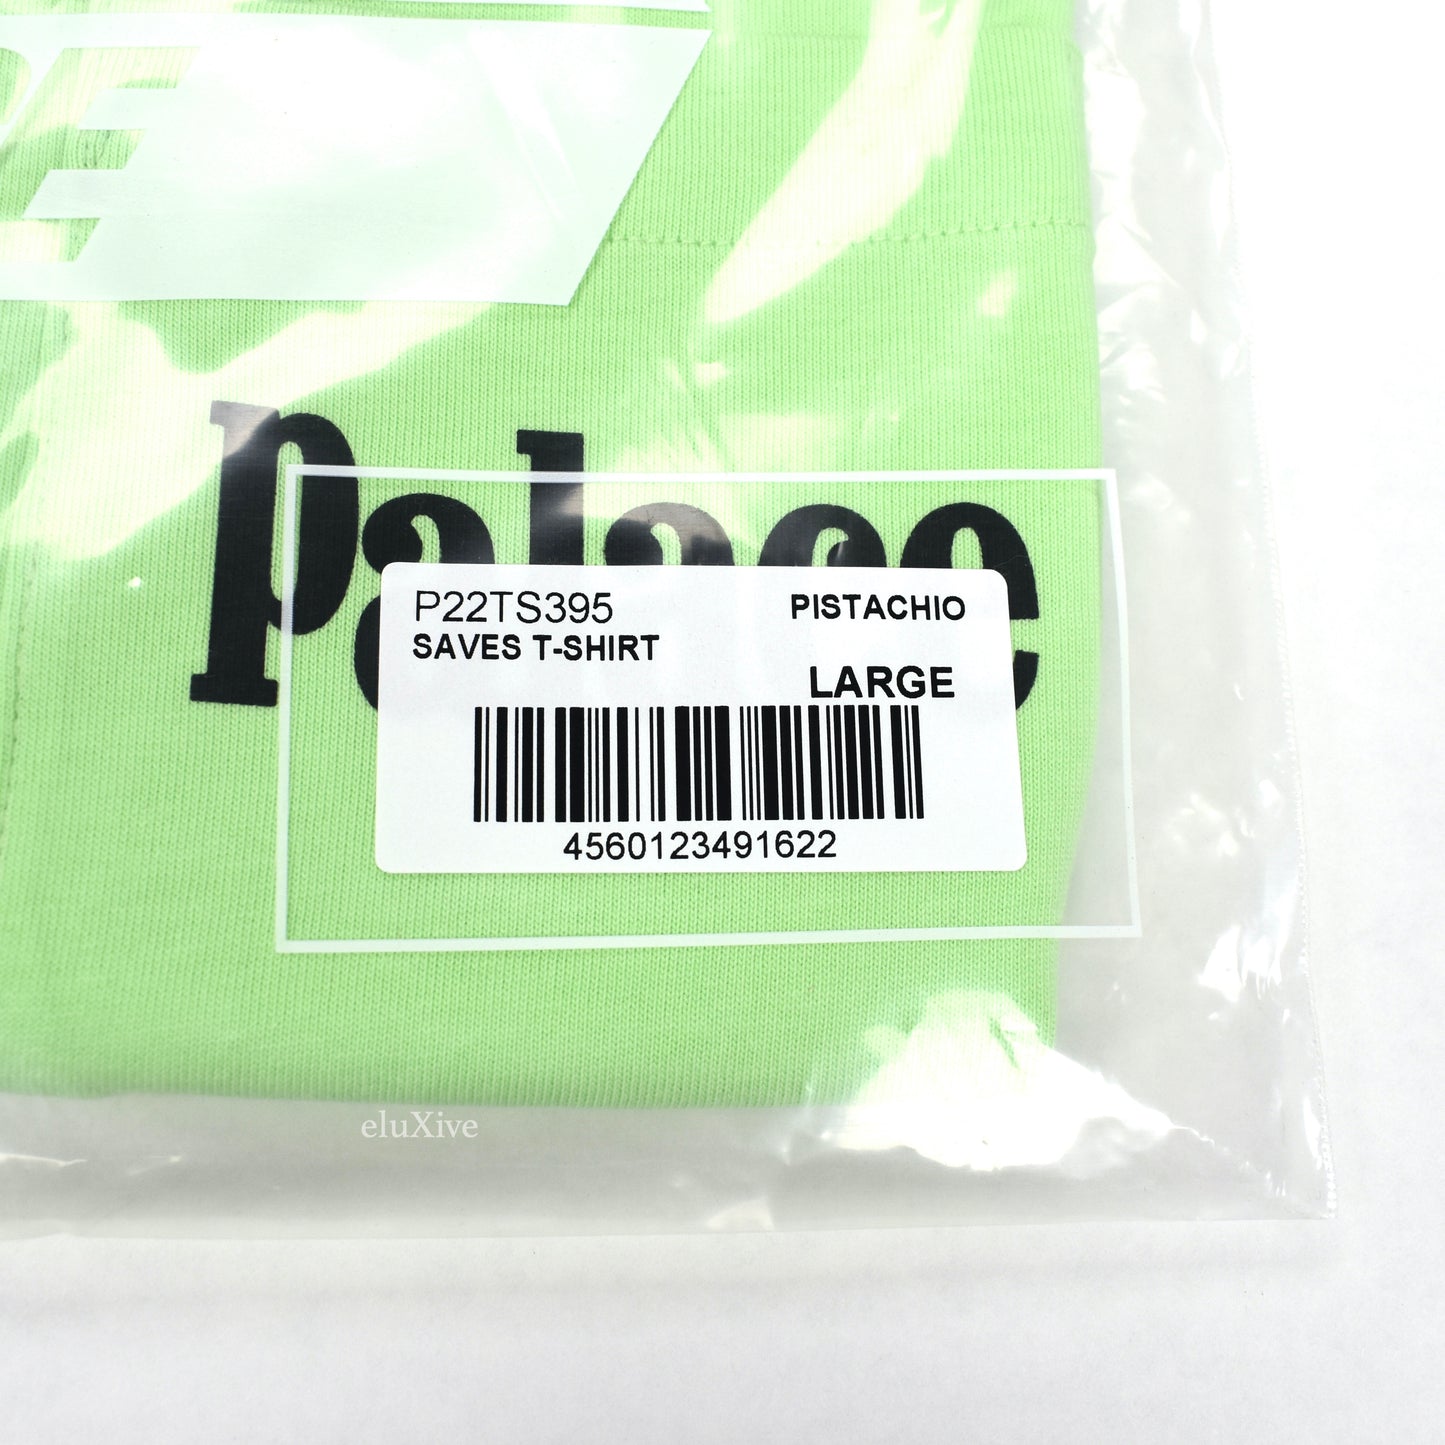 Palace - 'Marlboro Man' Saves Logo T-Shirt (Pistachio Green)